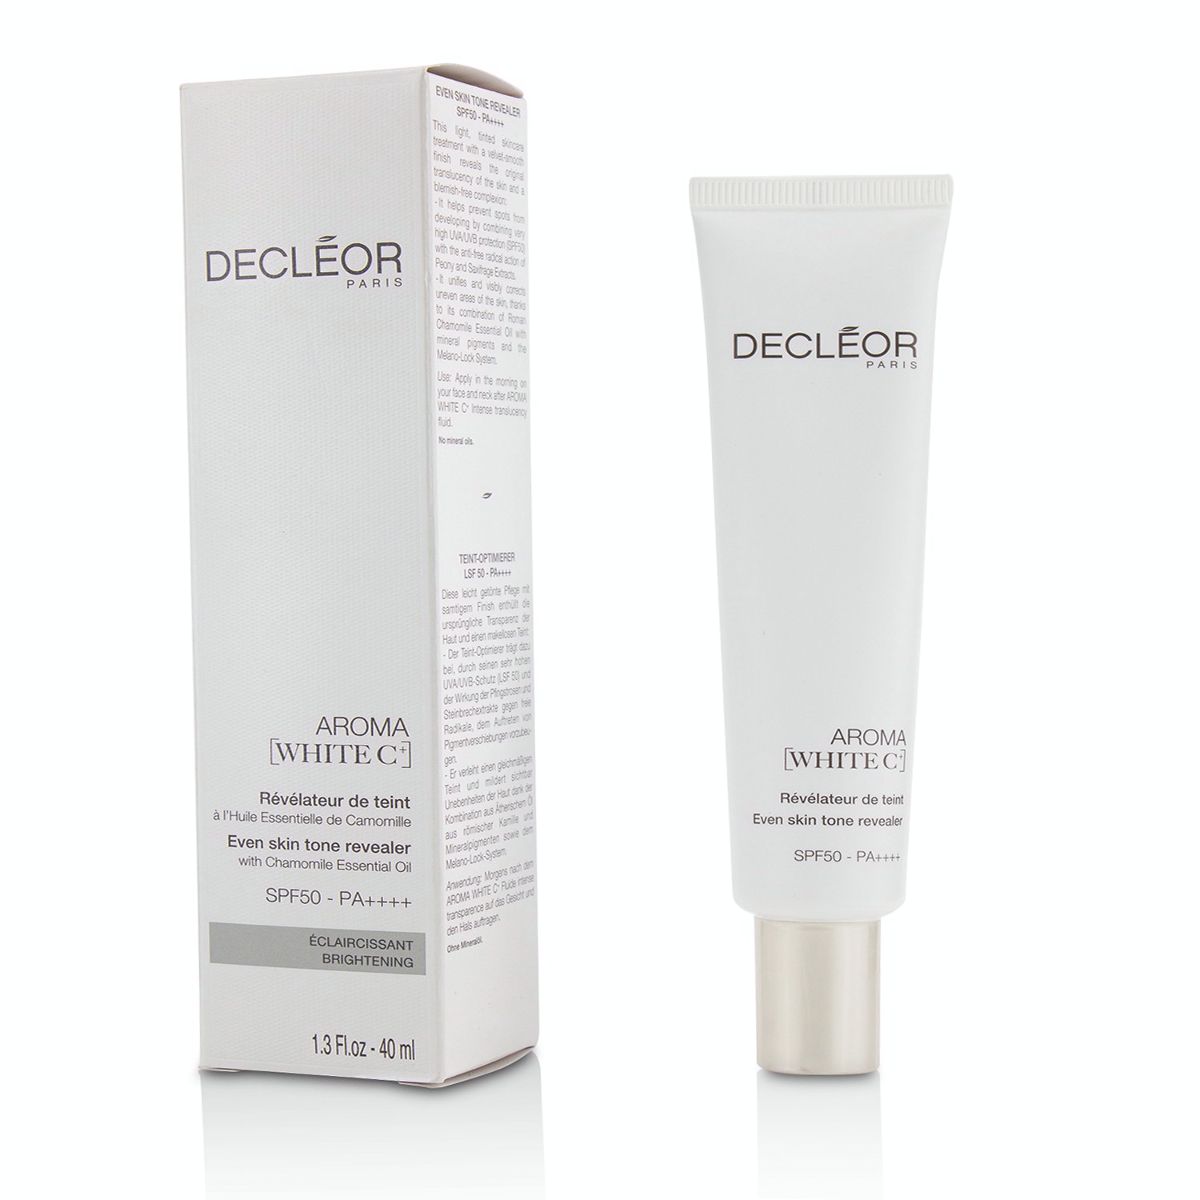 Aroma White C+ Even Skin Tone Revealer SPF 50 630000 Decleor Image